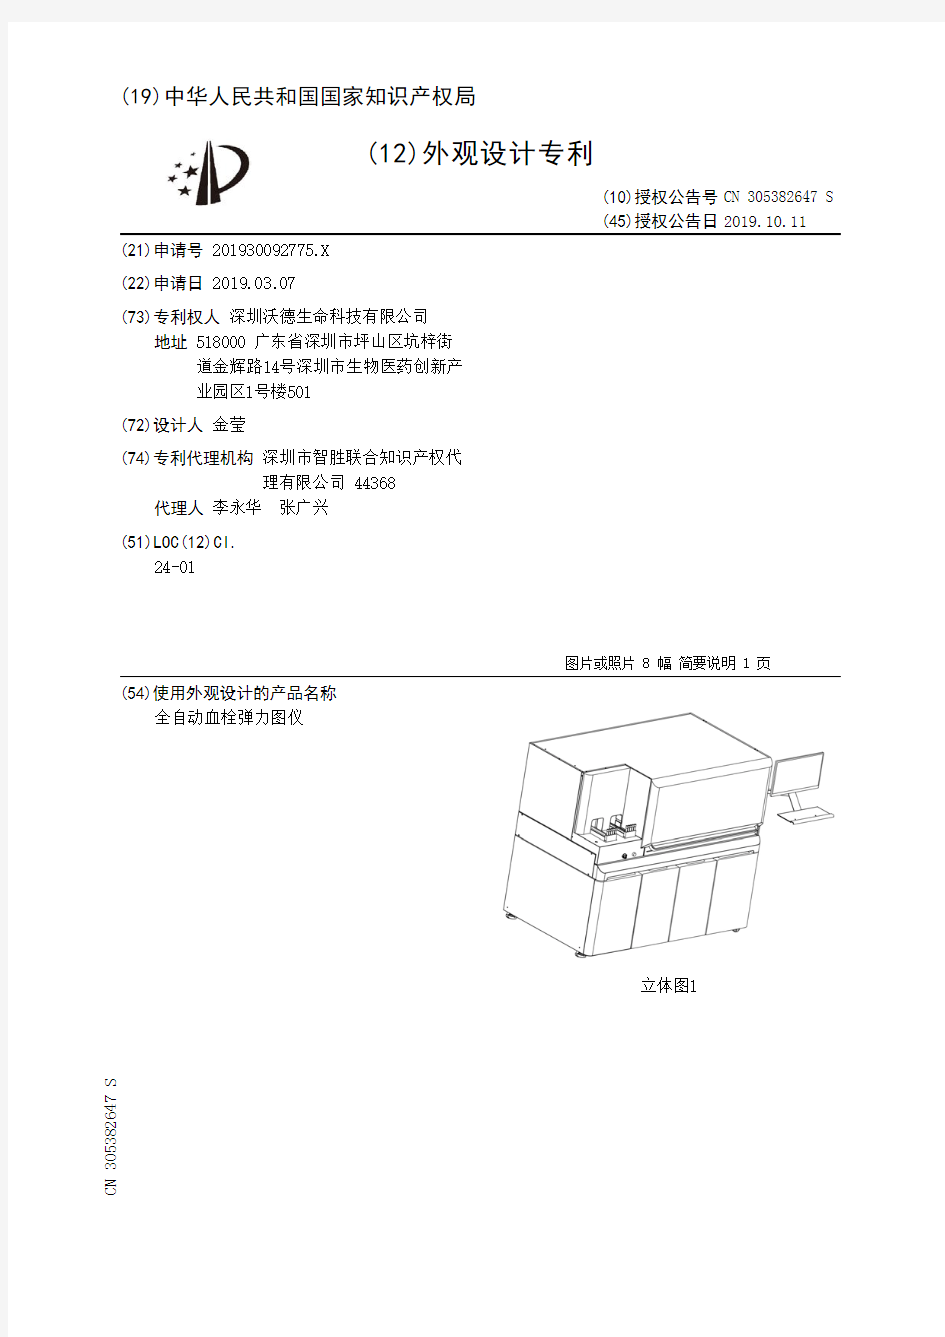 【CN305382647S】全自动血栓弹力图仪【专利】